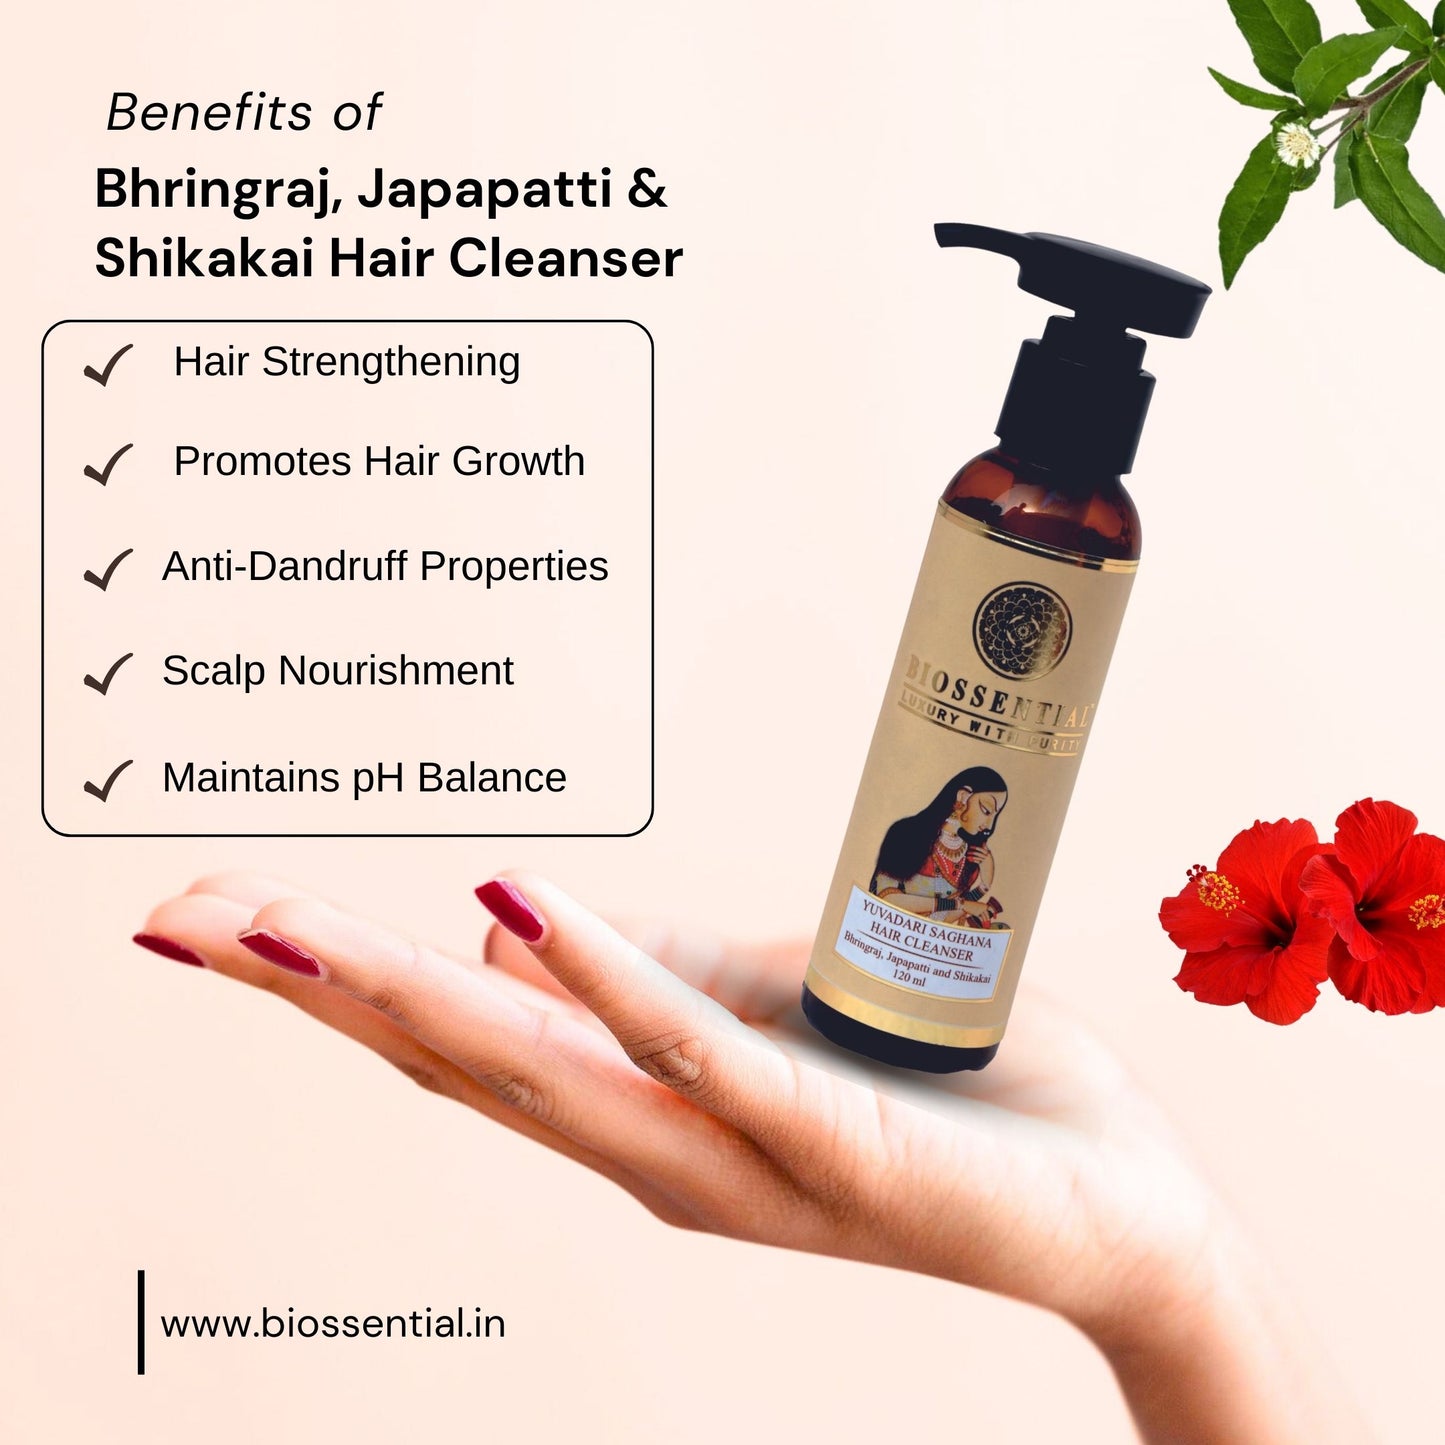 Biossential Saghana Bhringraj, Japapatti  & Shikakai Hair Cleanser